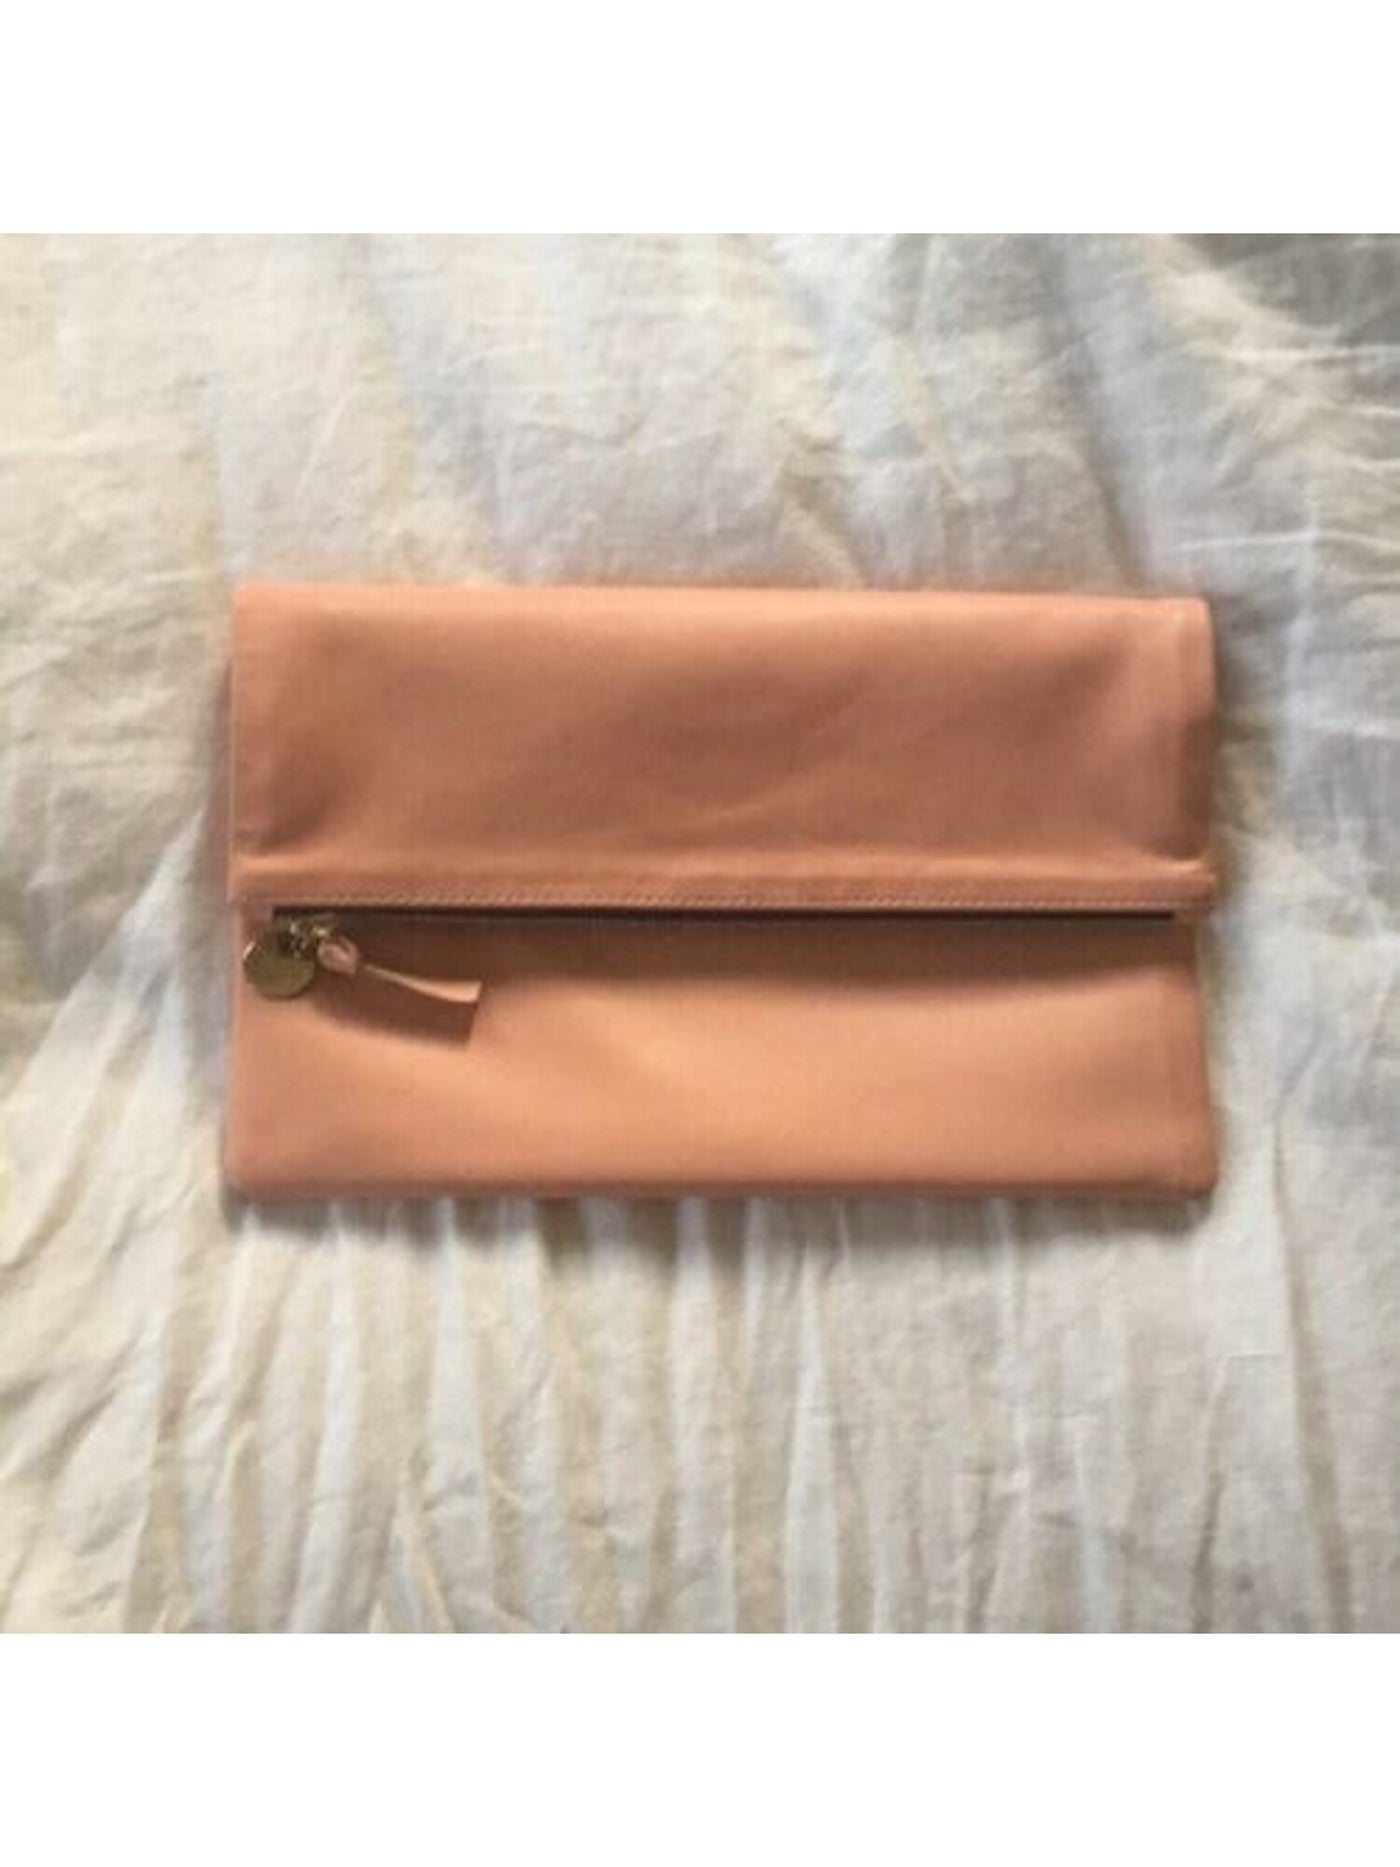 Clare V Women's Pink Leather Strapless Clutch Handbag Purse